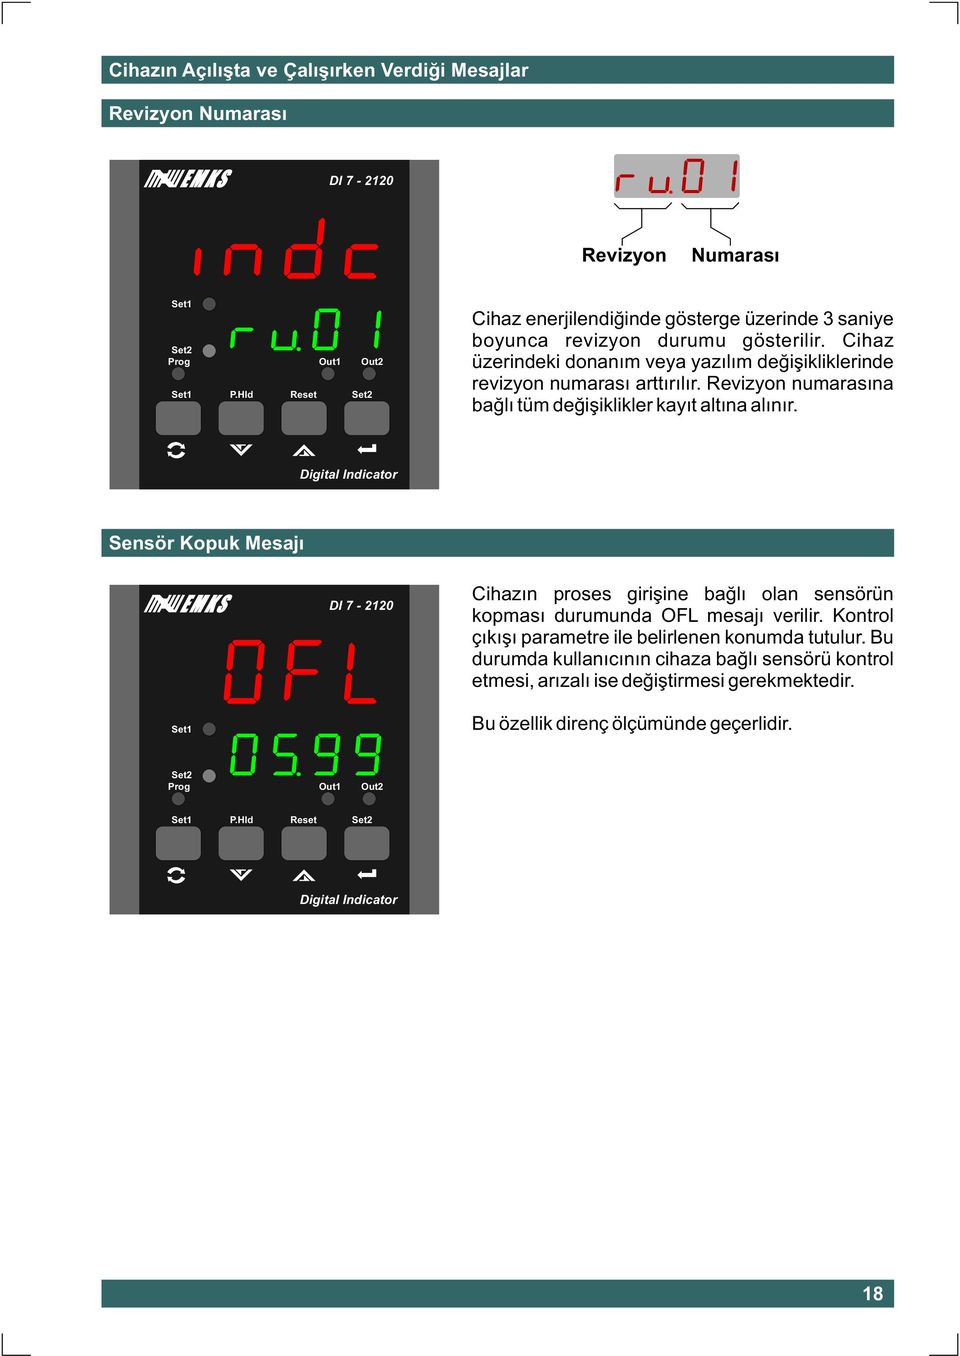 Digital Indicator Sensör Kopuk Mesajý DI 7-2120 Cihazýn proses giriþine baðlý olan sensörün kopmasý durumunda OFL mesajý verilir.